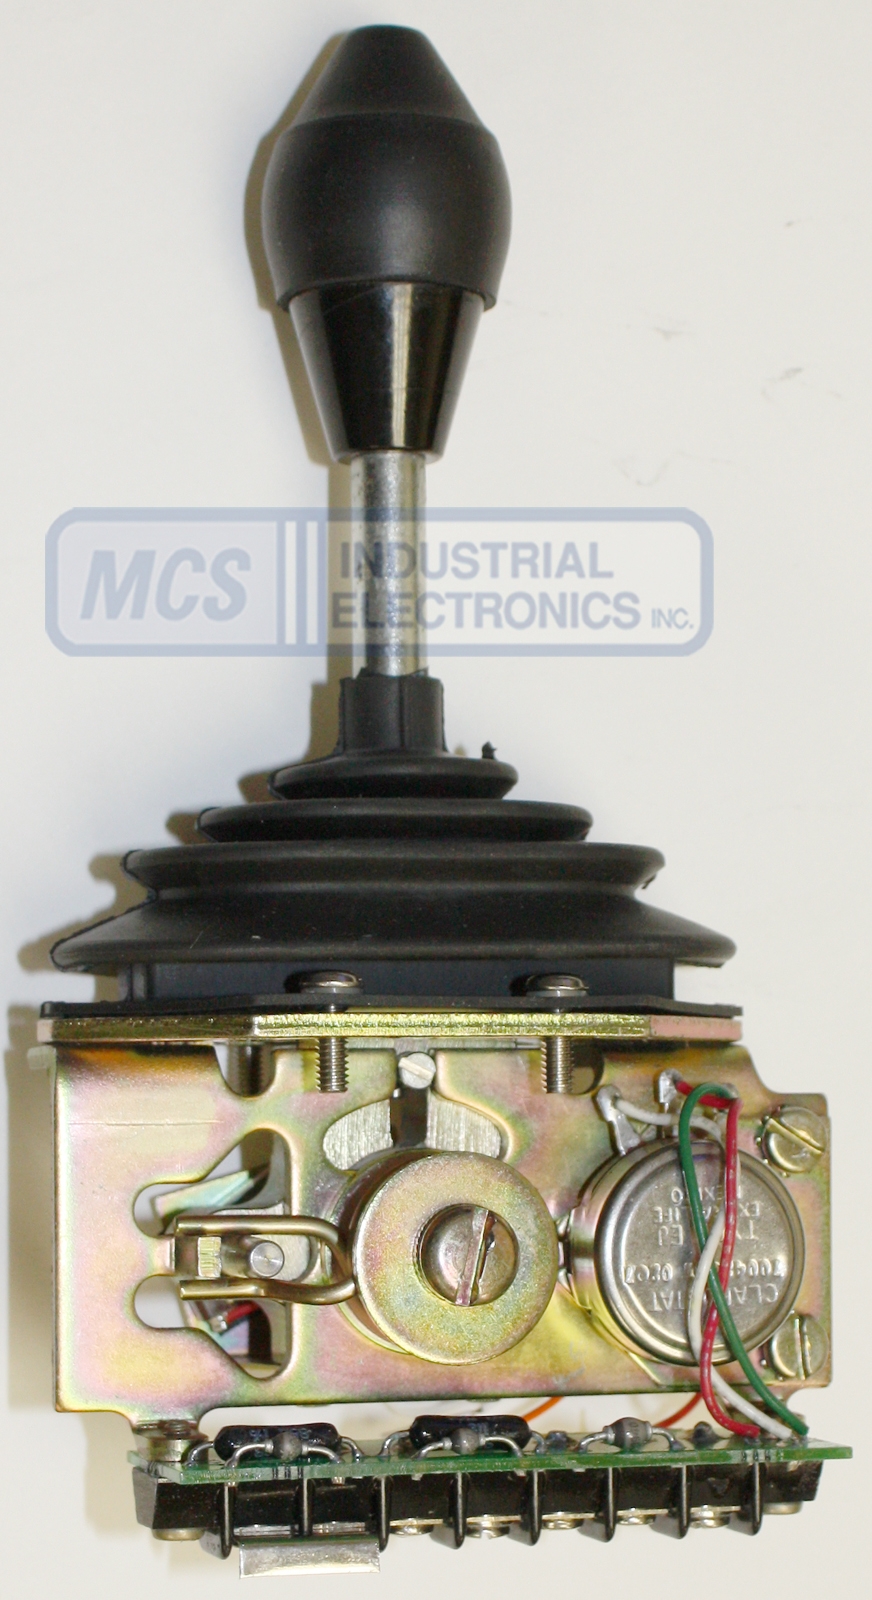 59689001 Altec Joystick Controller MCS Industrial